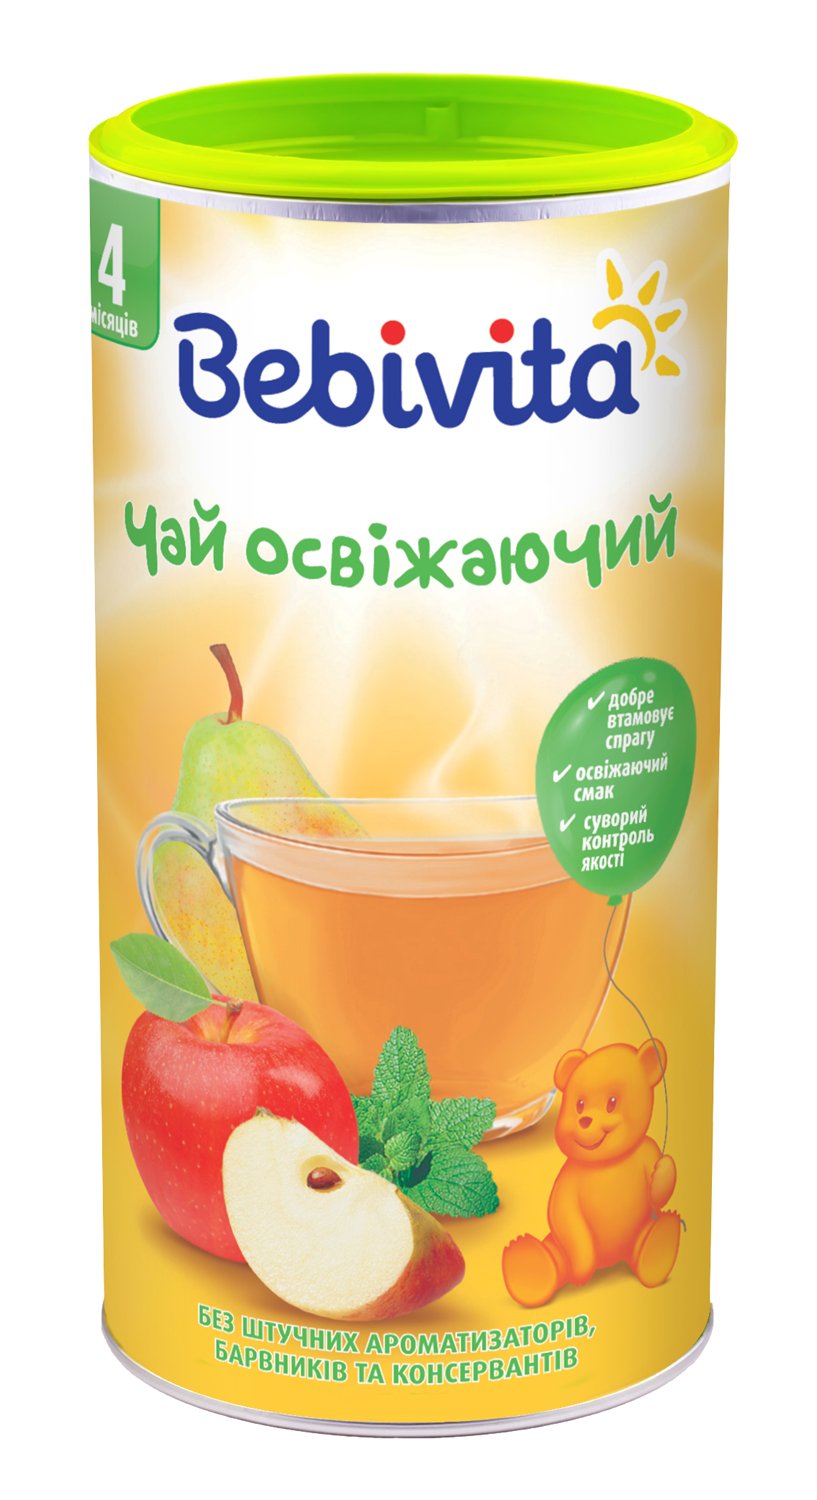 Чай освежающий Bebivita в гранулах, 200 г - фото 1